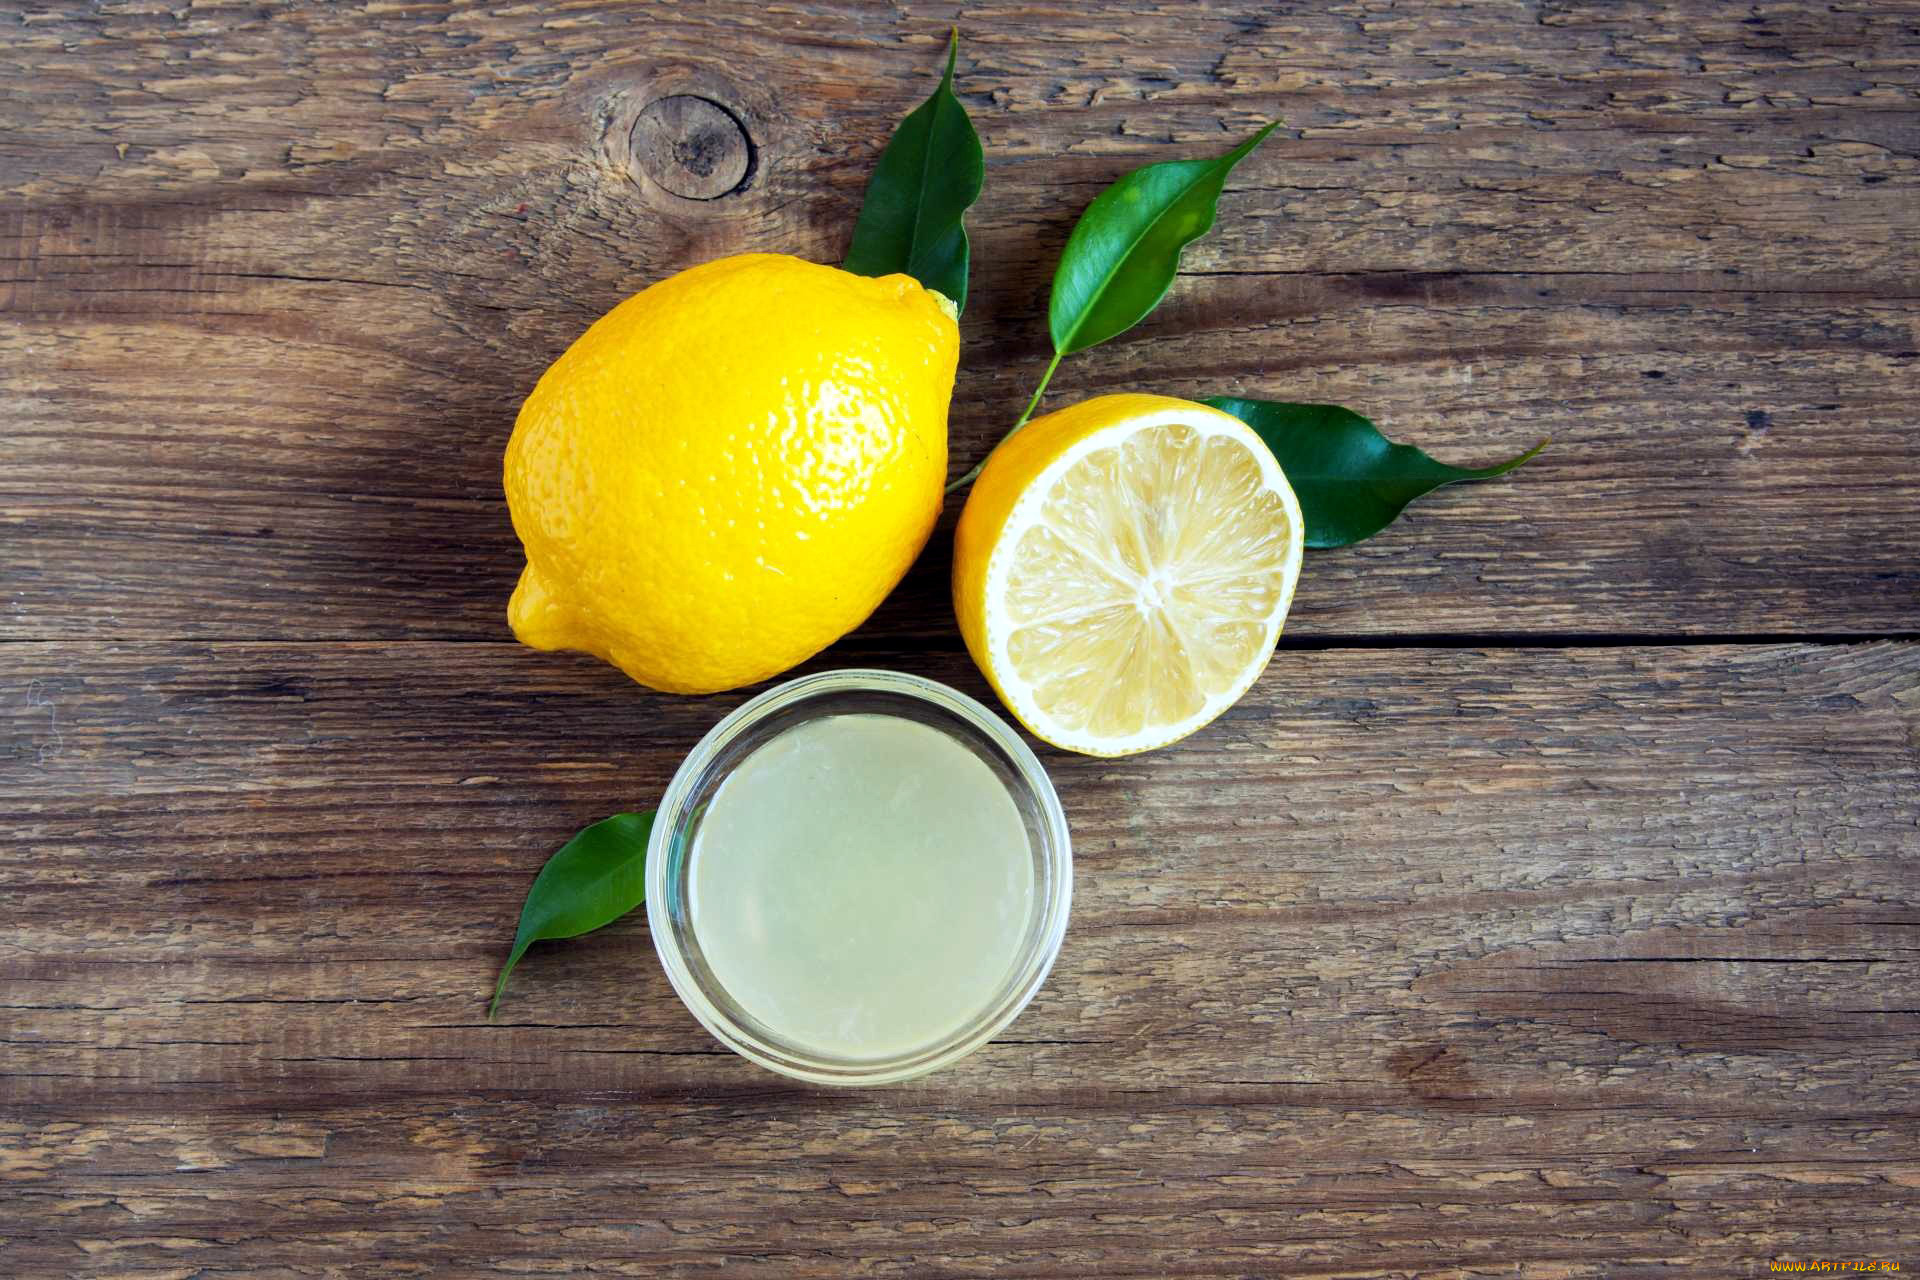 Лемон. Лемон Джус. Лимонный сок. Лимонный сырок. Лимон и лимонный сок.